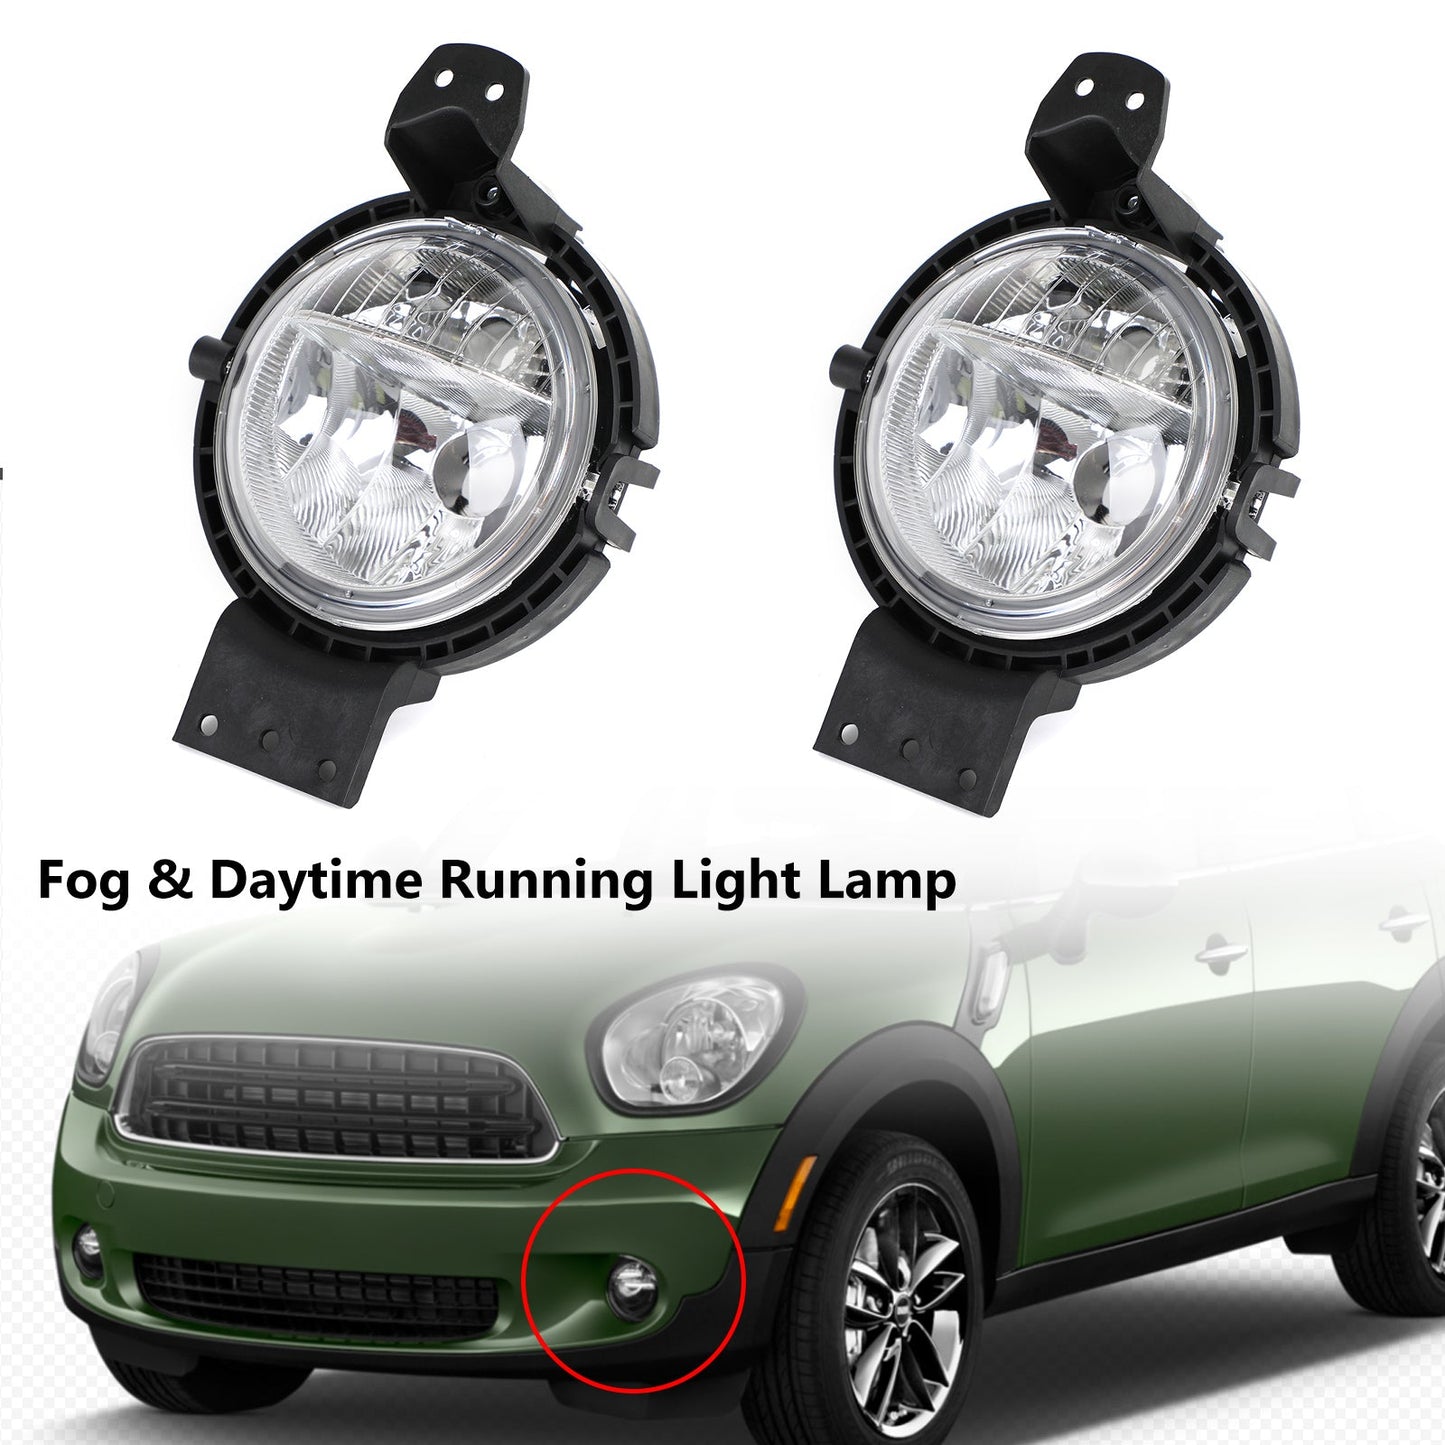 2010-2016 BMW Mini Countryman R60 L&R Fog Light Daytime Running Lamp